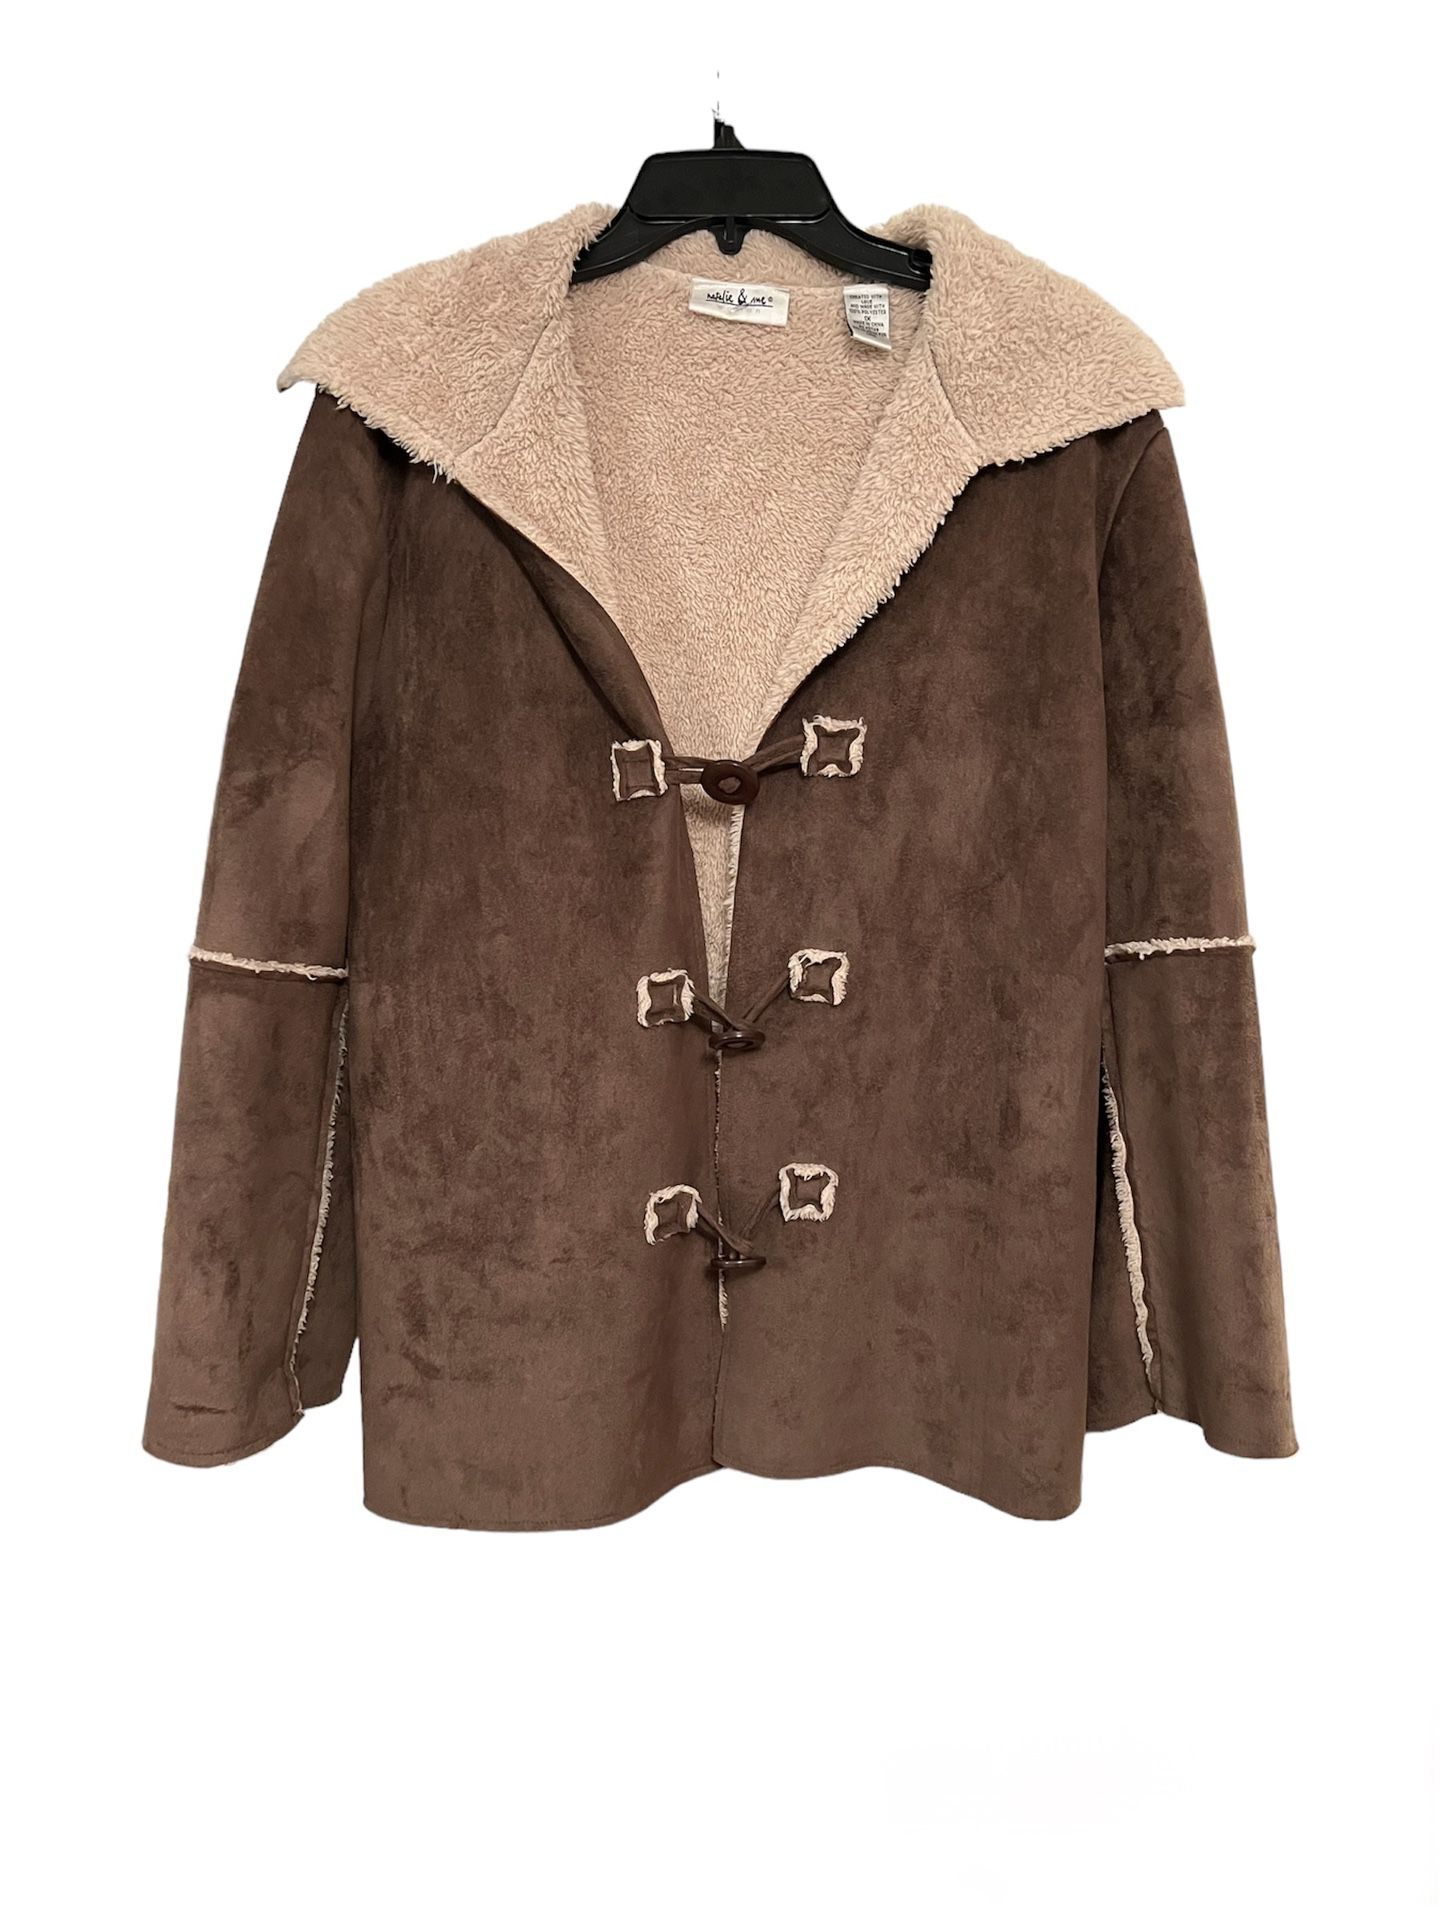 Brown Faux Shearling Jacket (Size 1X)